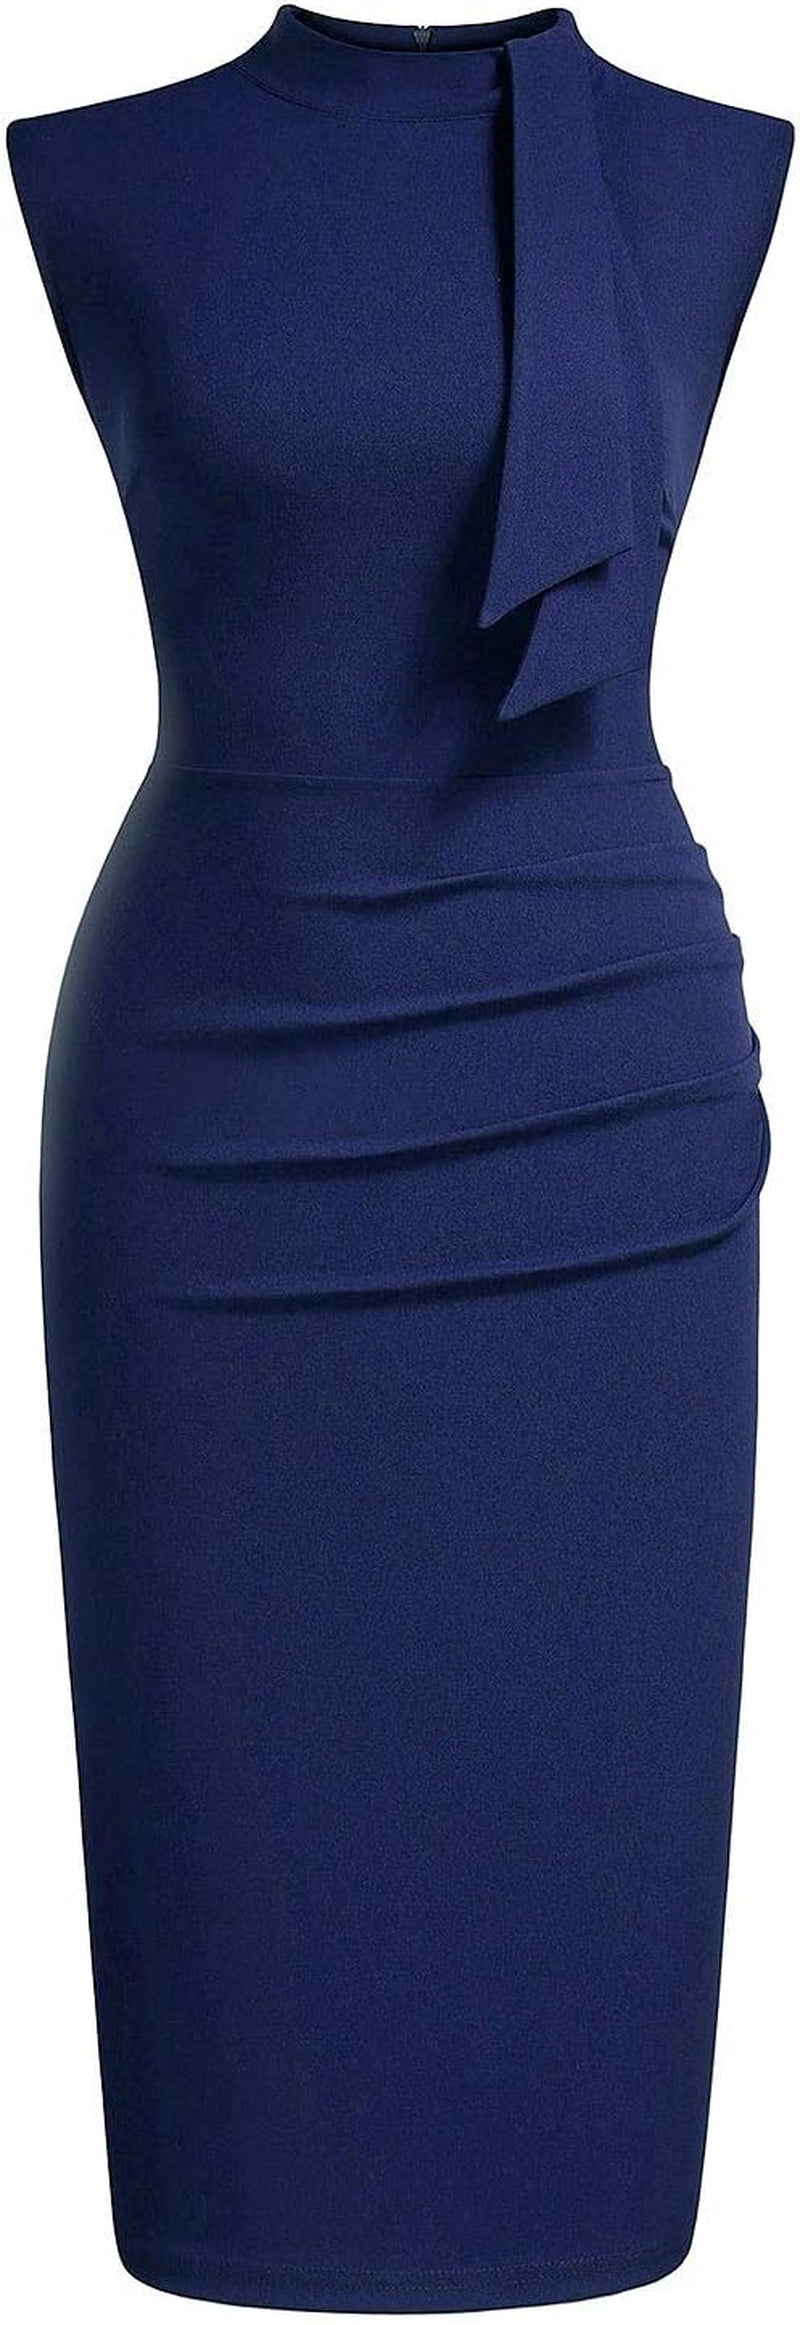 Women'S Retro 1950S Style Half Collar Ruffle Cocktail Pencil Dress